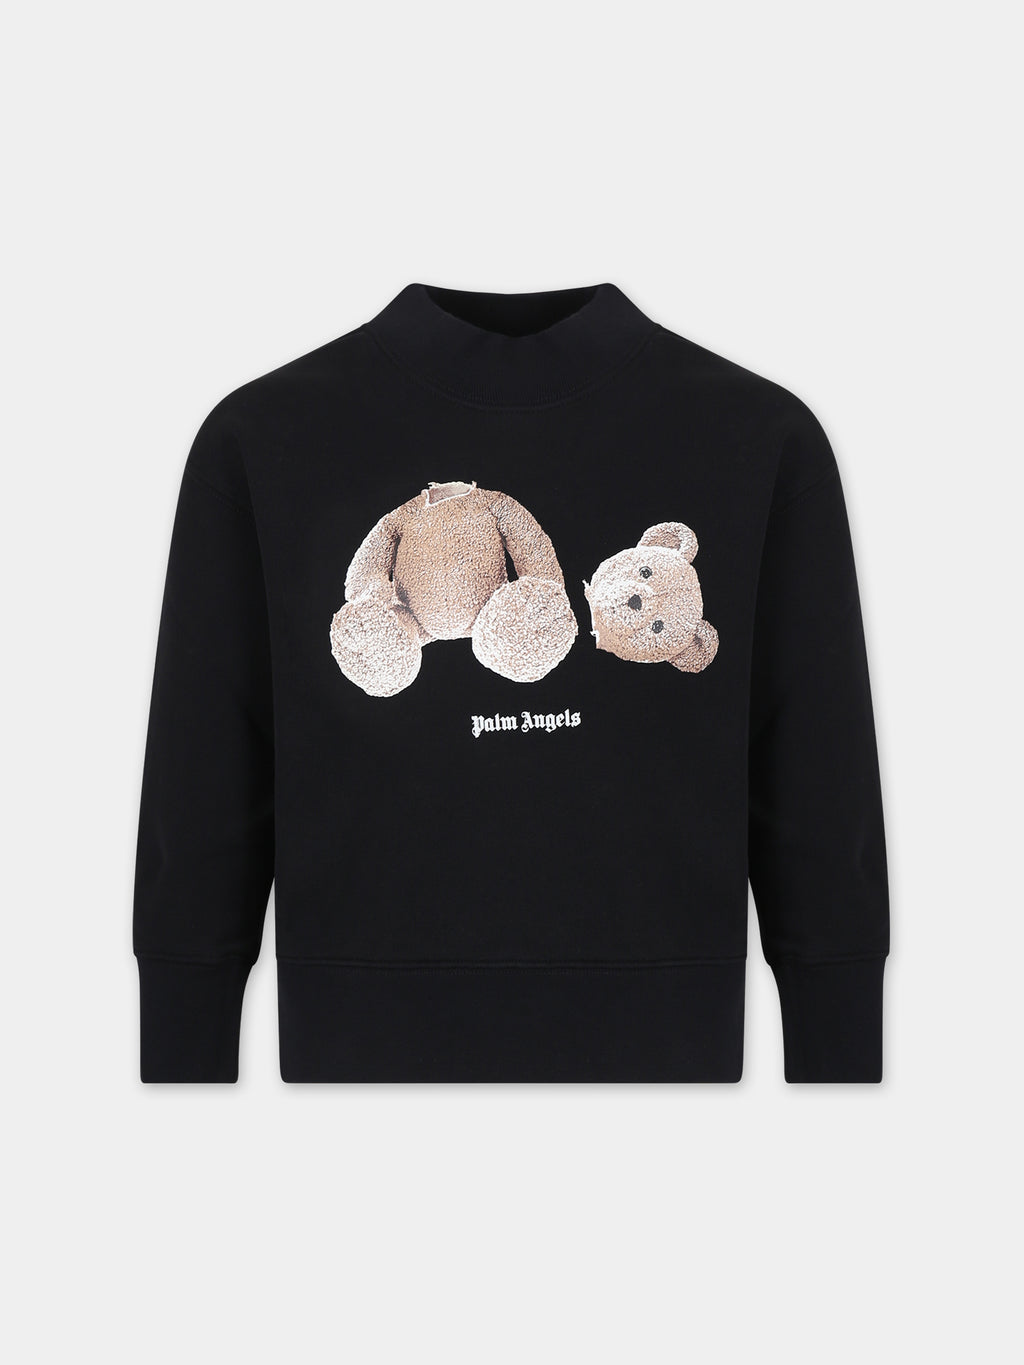 Black sweatshirt for kids with bear